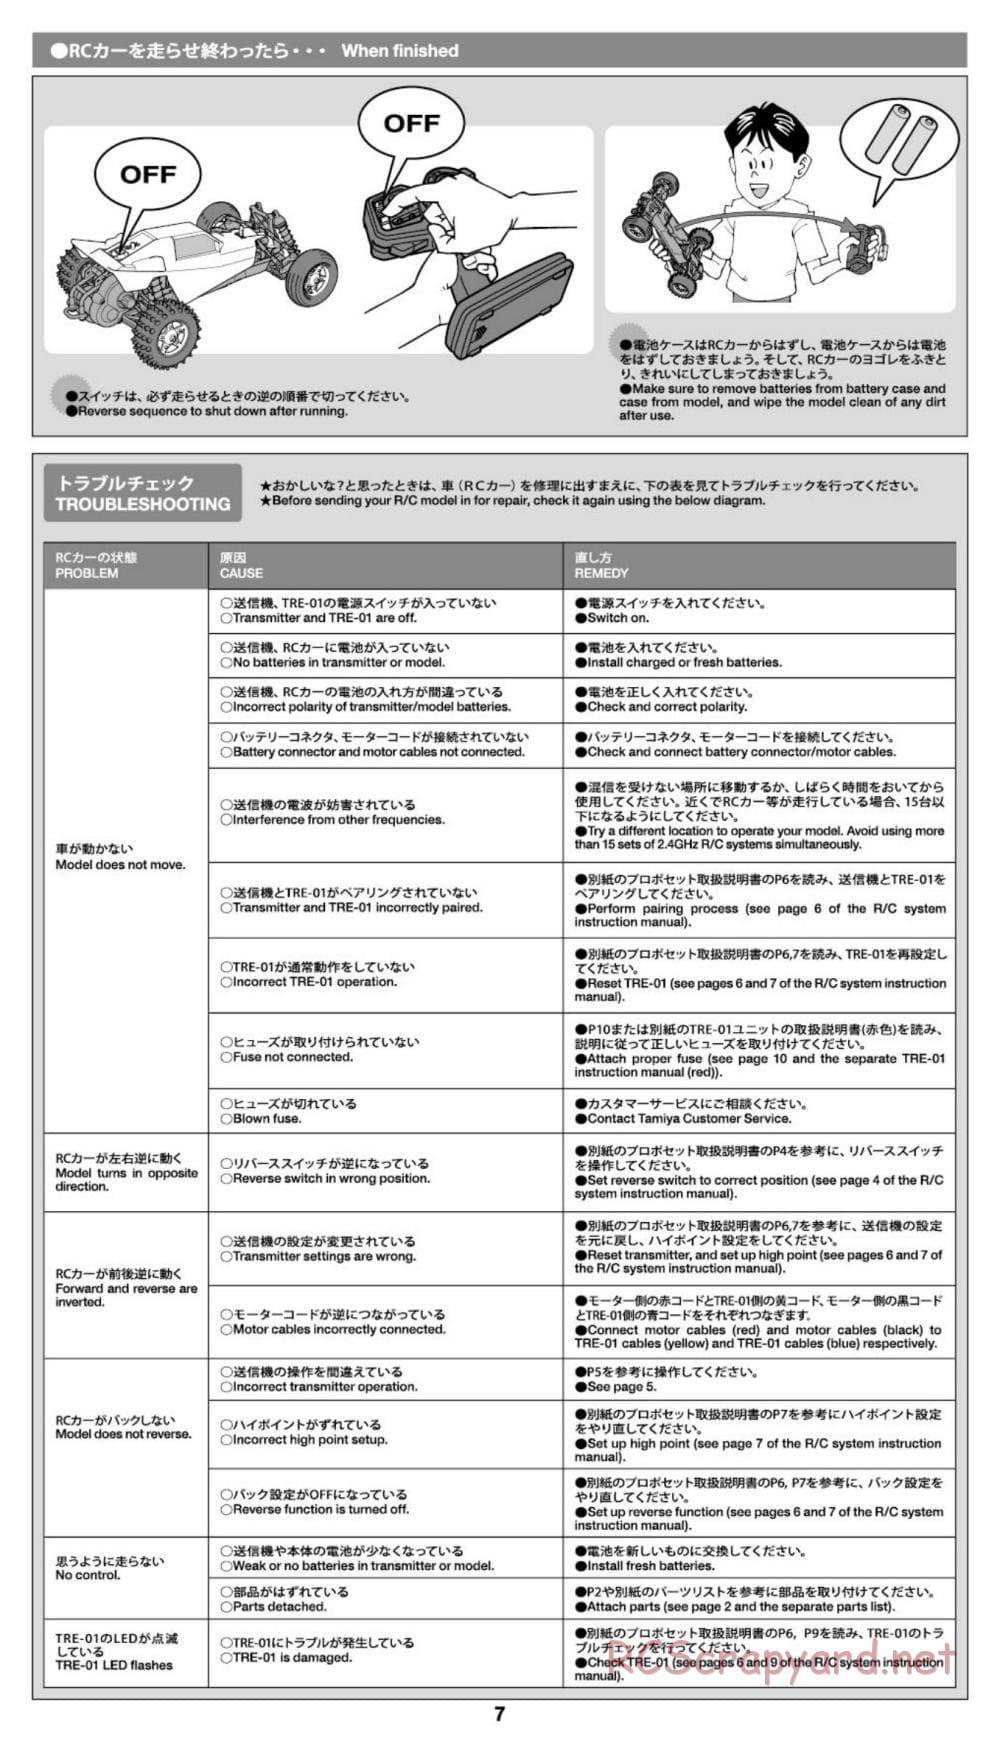 Tamiya - GB-01S Chassis - Manual - Page 7